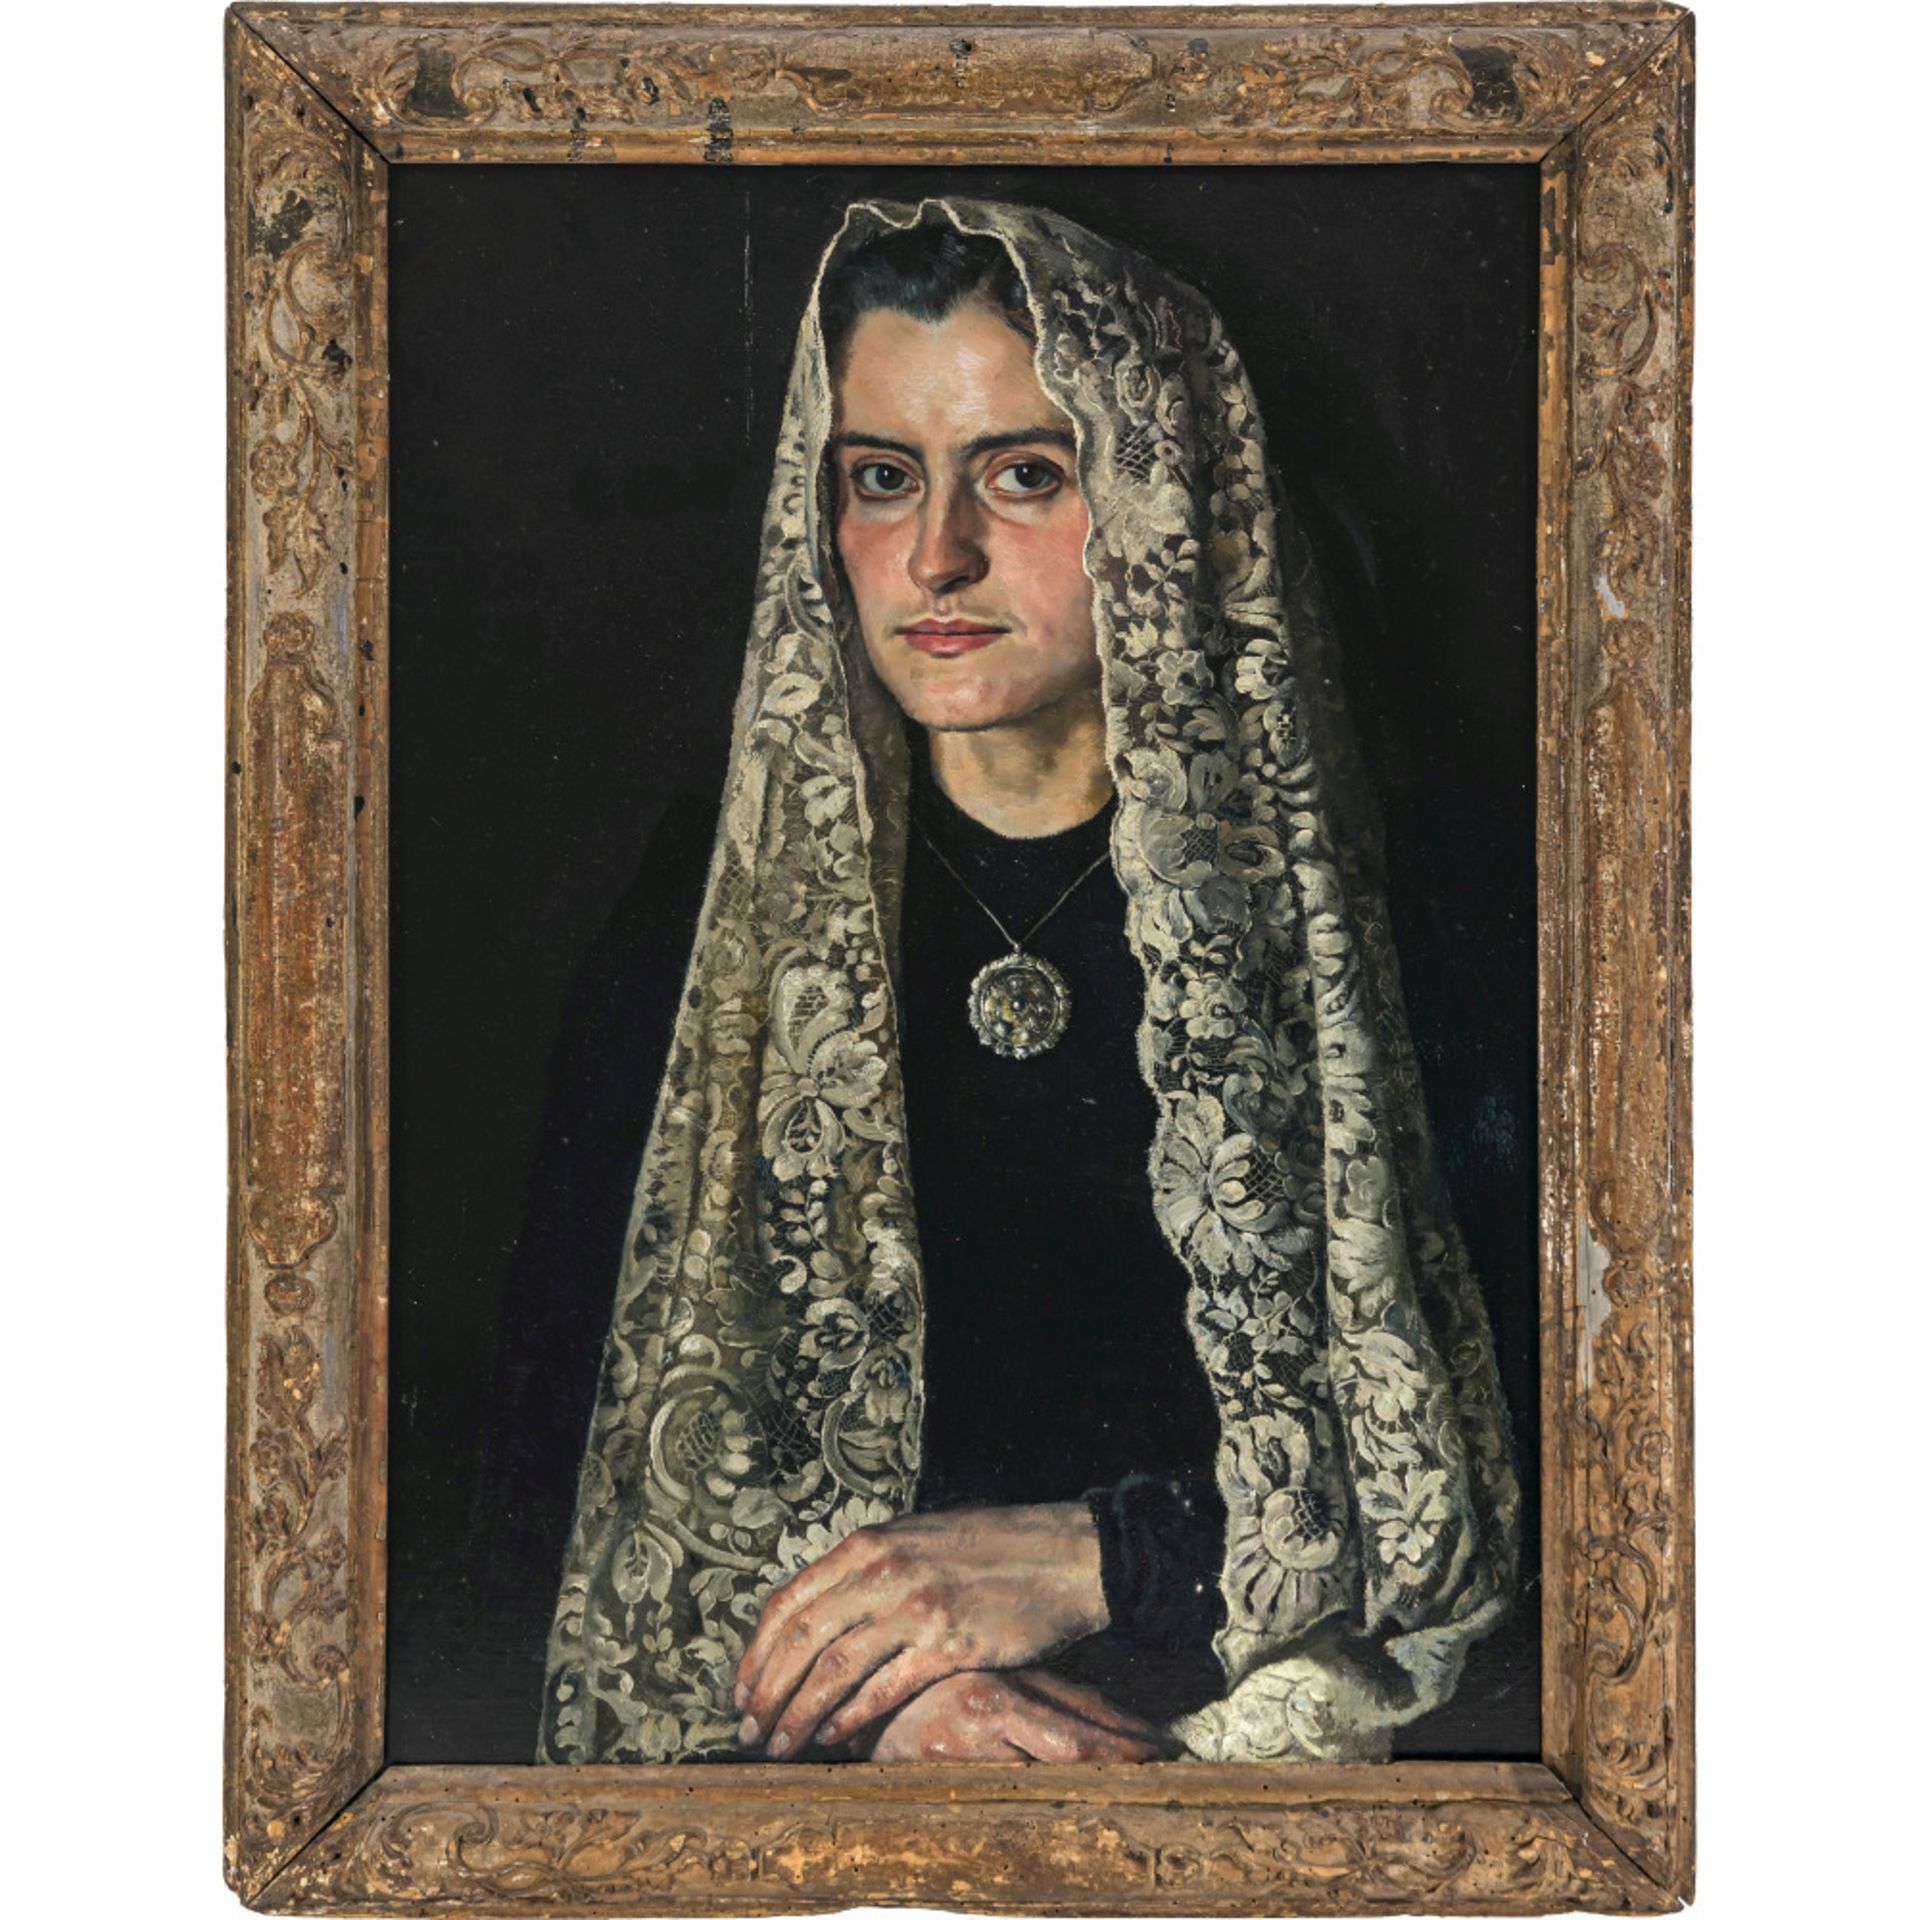 Thomas Baumgartner - Italian woman with lace headscarf - Image 2 of 2